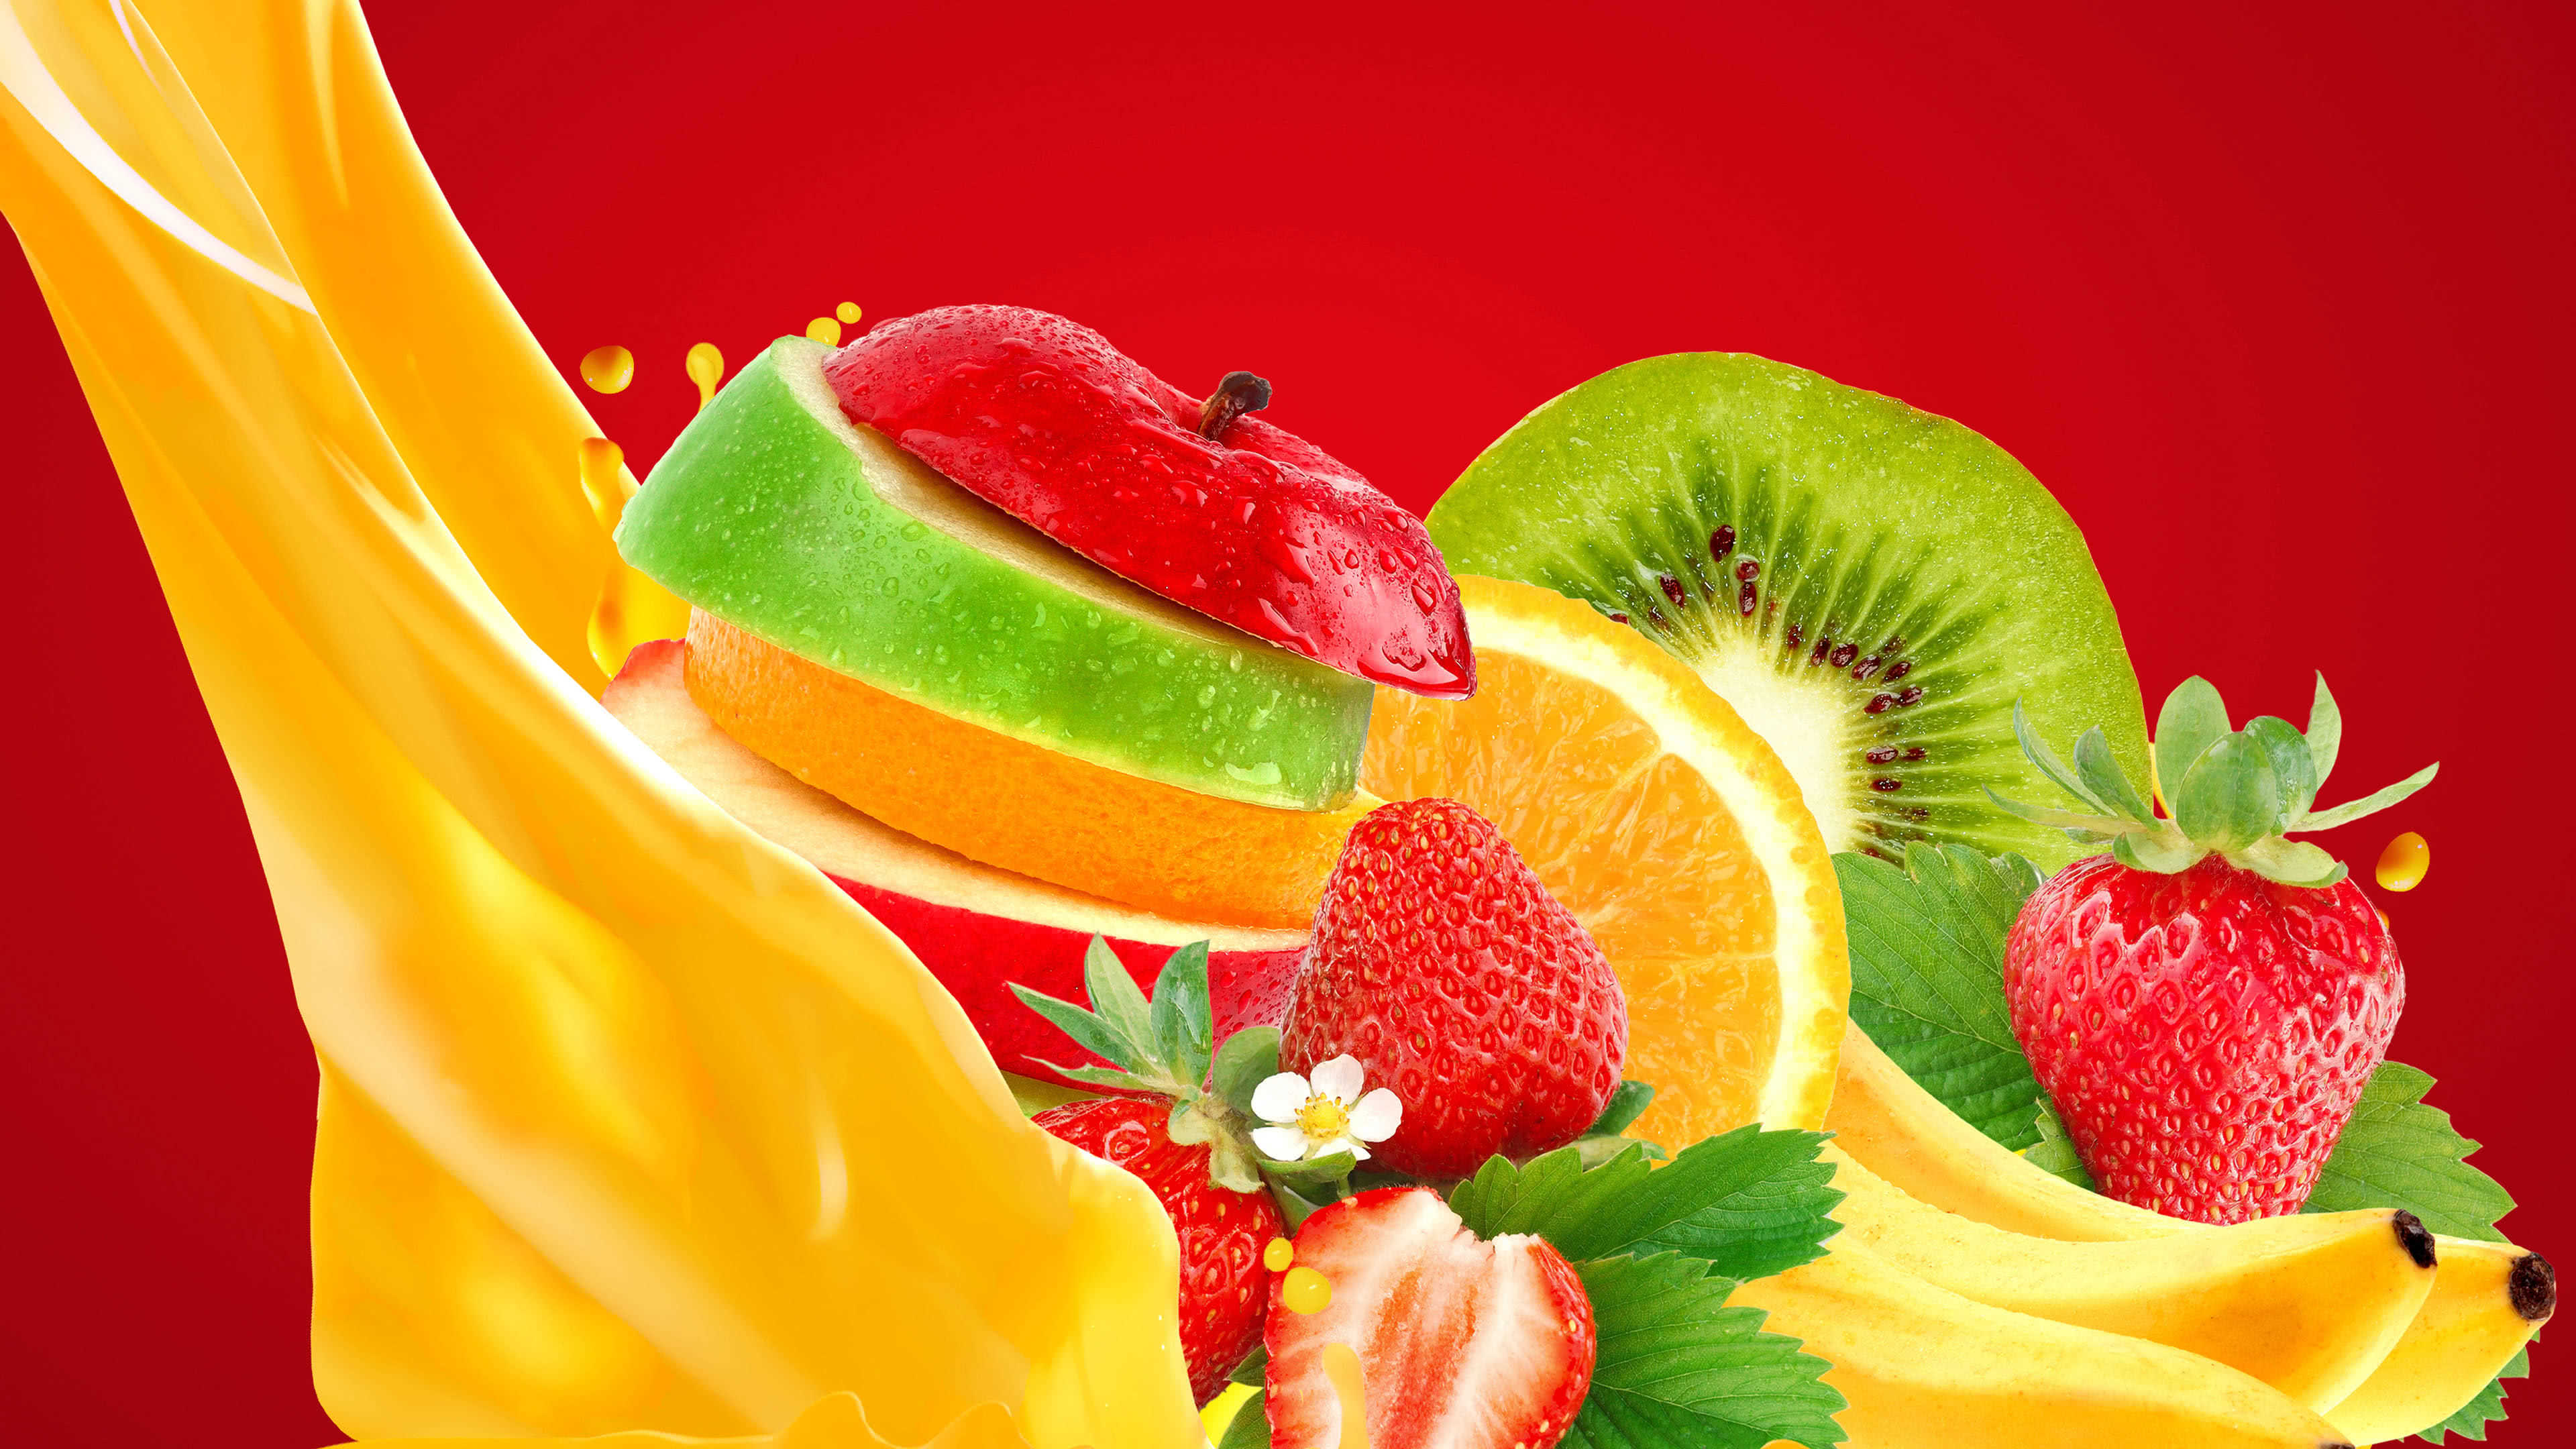 Mixed Fruits Strawberry Banana Apple Kiwi Orange UHD 4k Wallpaper